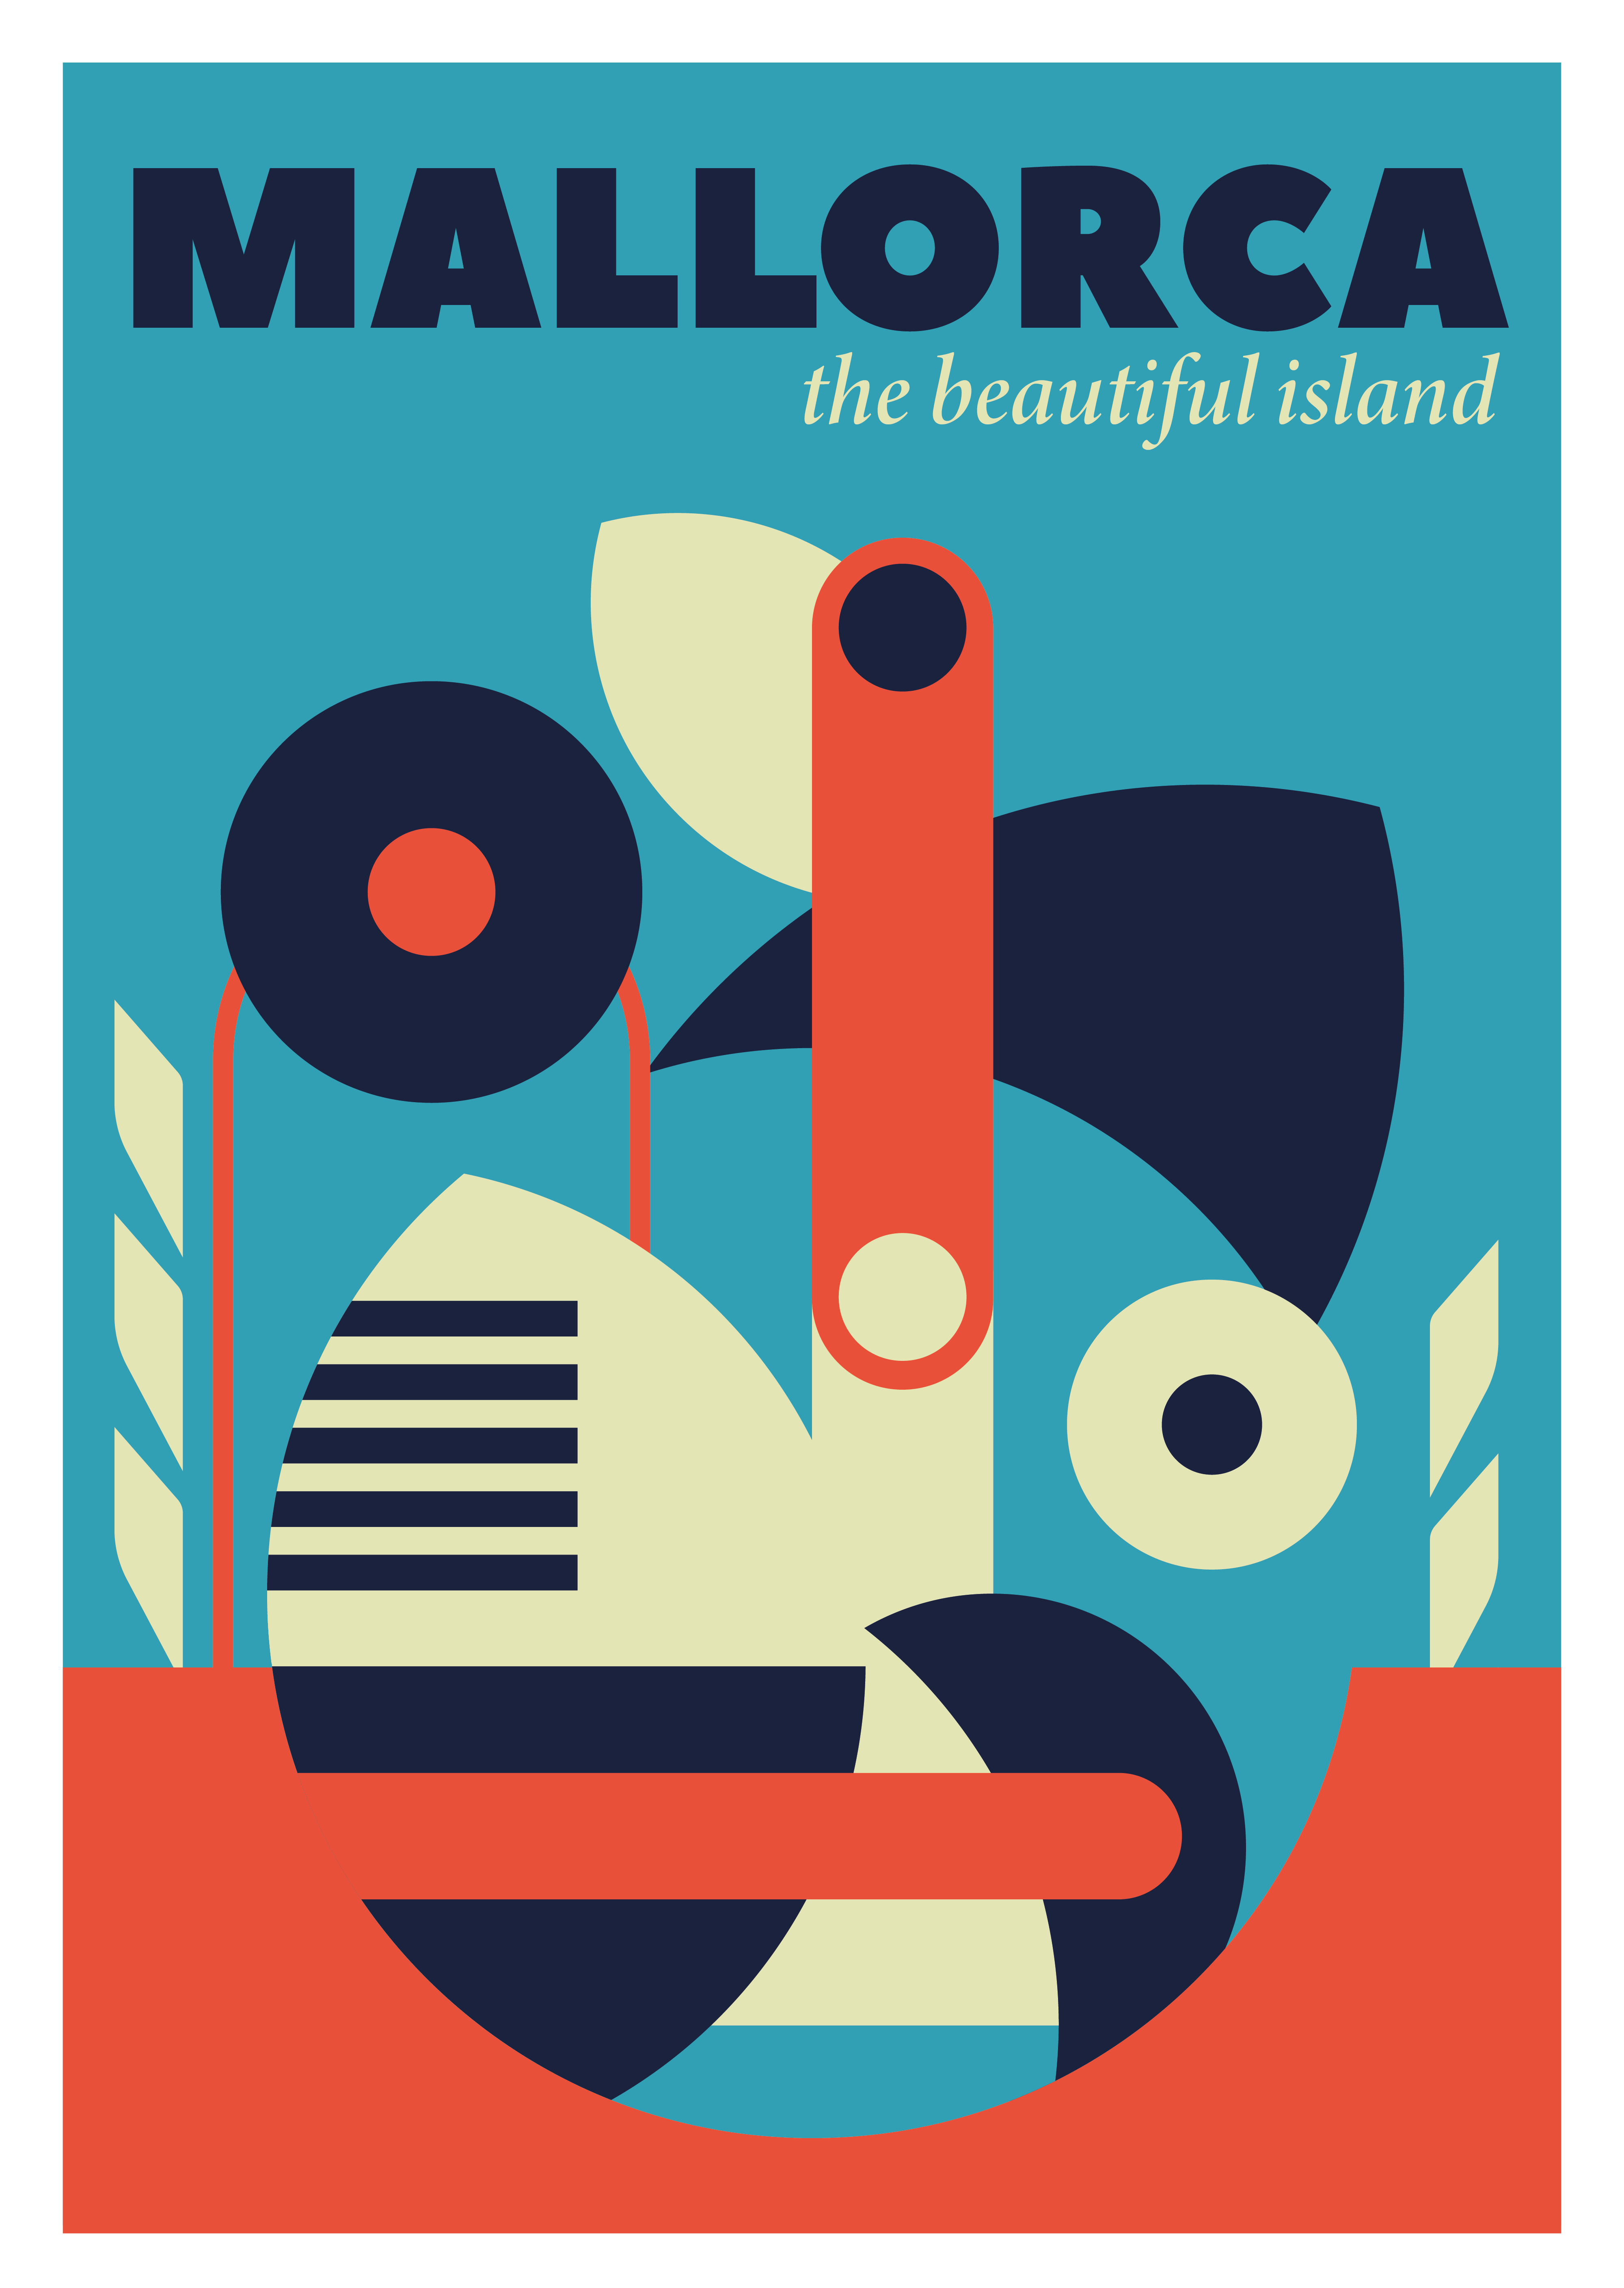 Mallorca Poster – The Beautiful Island